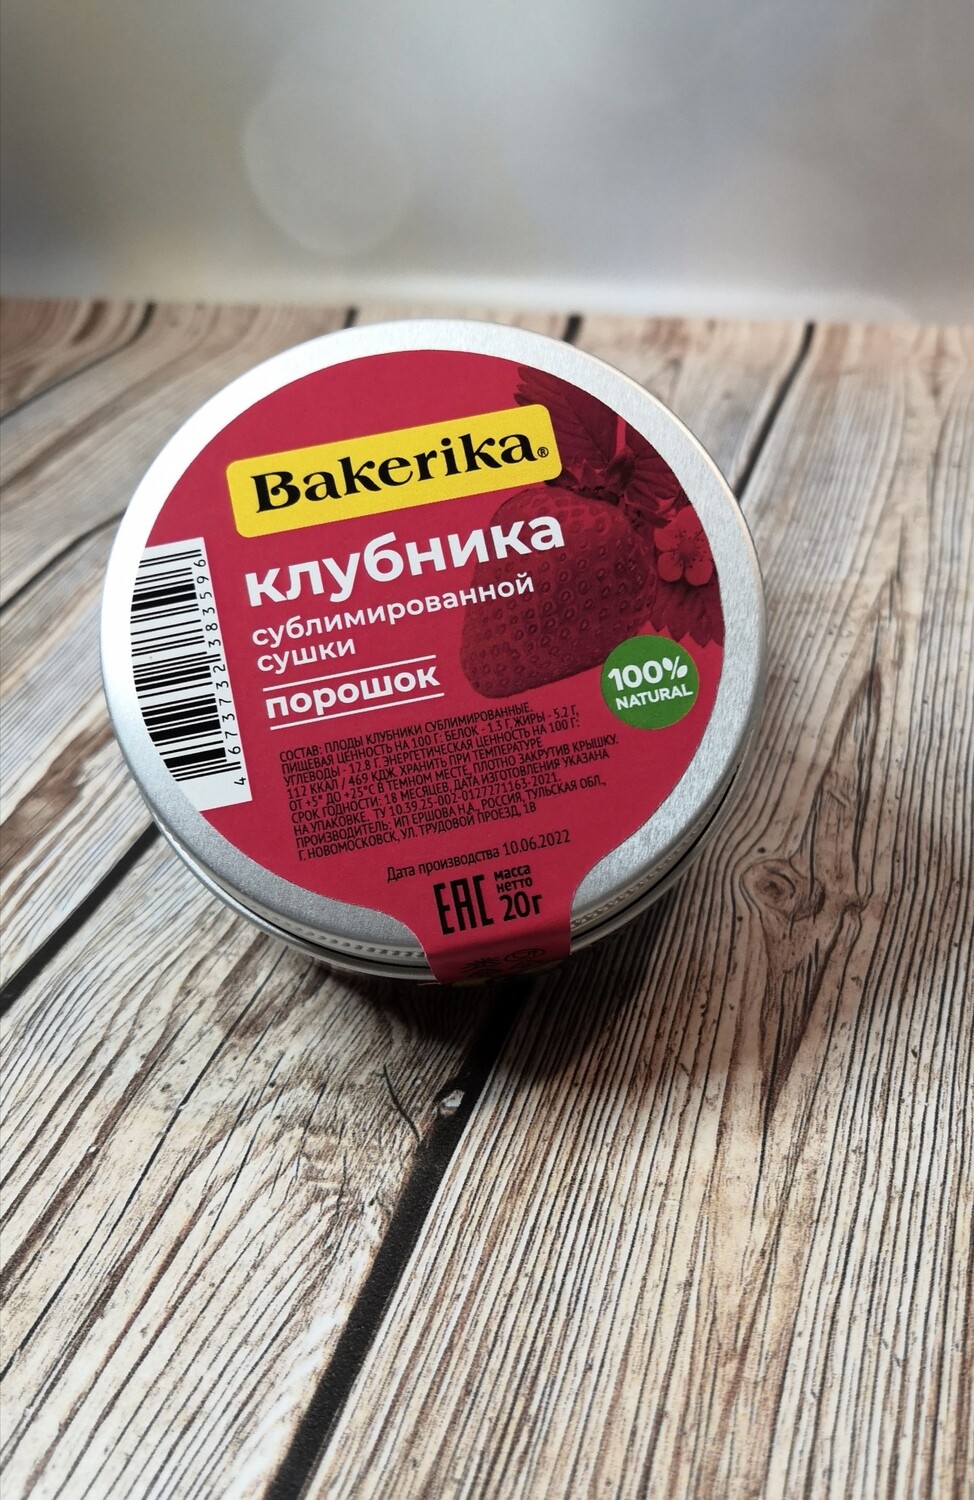 Клубника сублимированной сушки «Bakerika» порошок, 20 гр